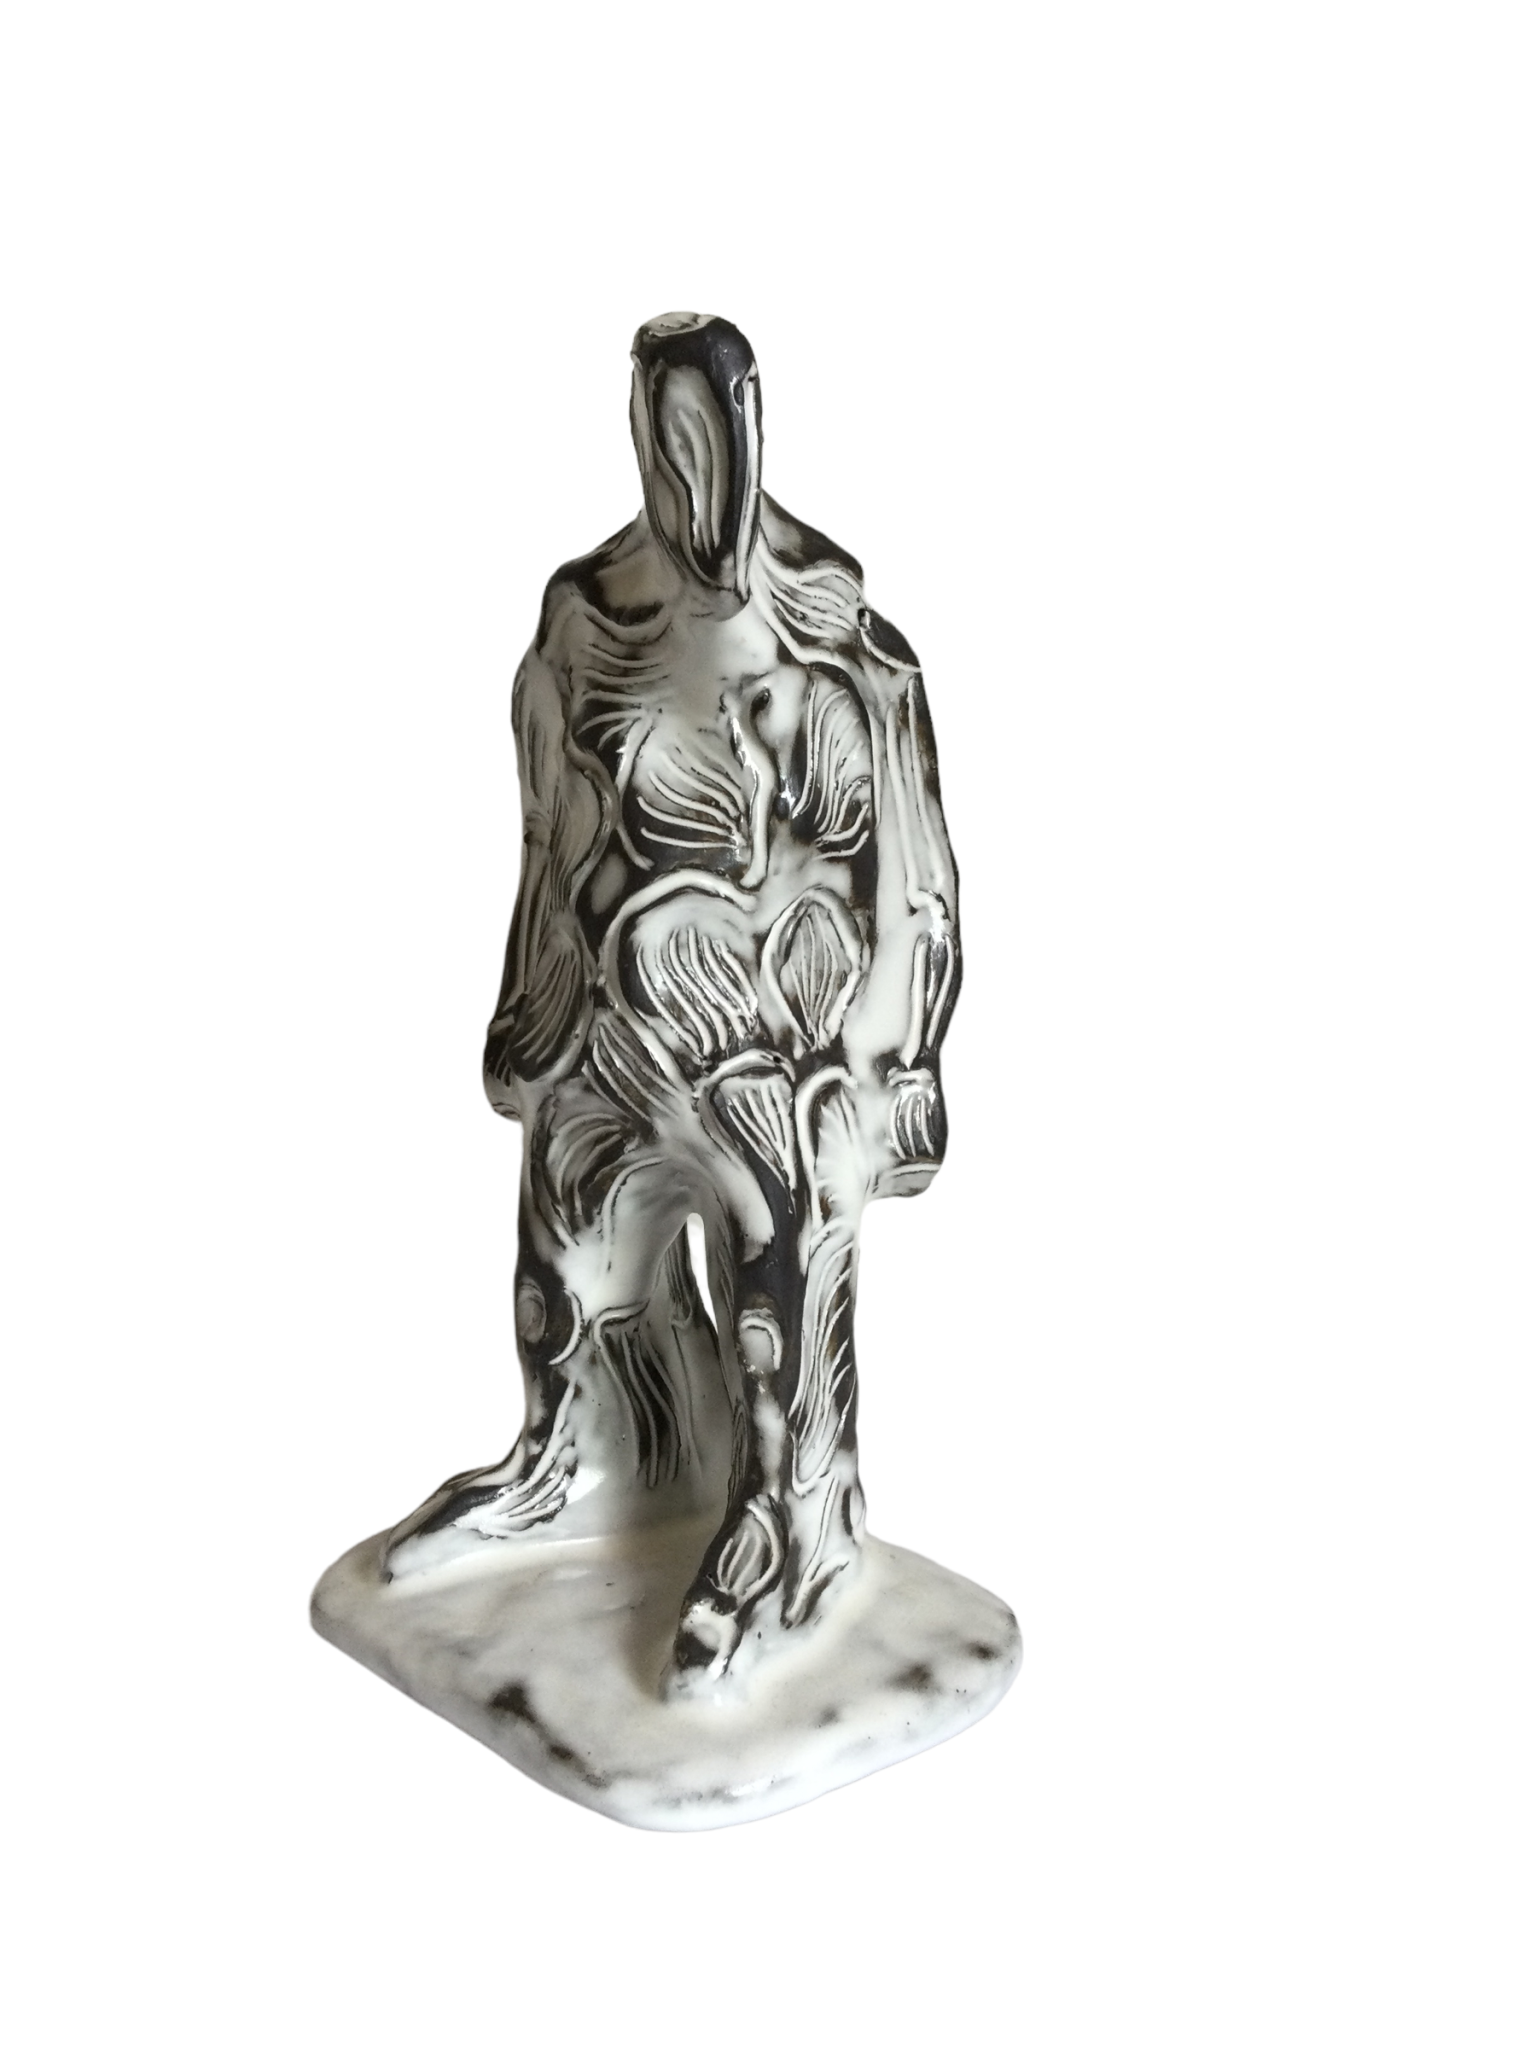 Robert Delves - Oceanic Mimesis Figure 2 - Ceramic sculpture -27x14x11cm-1